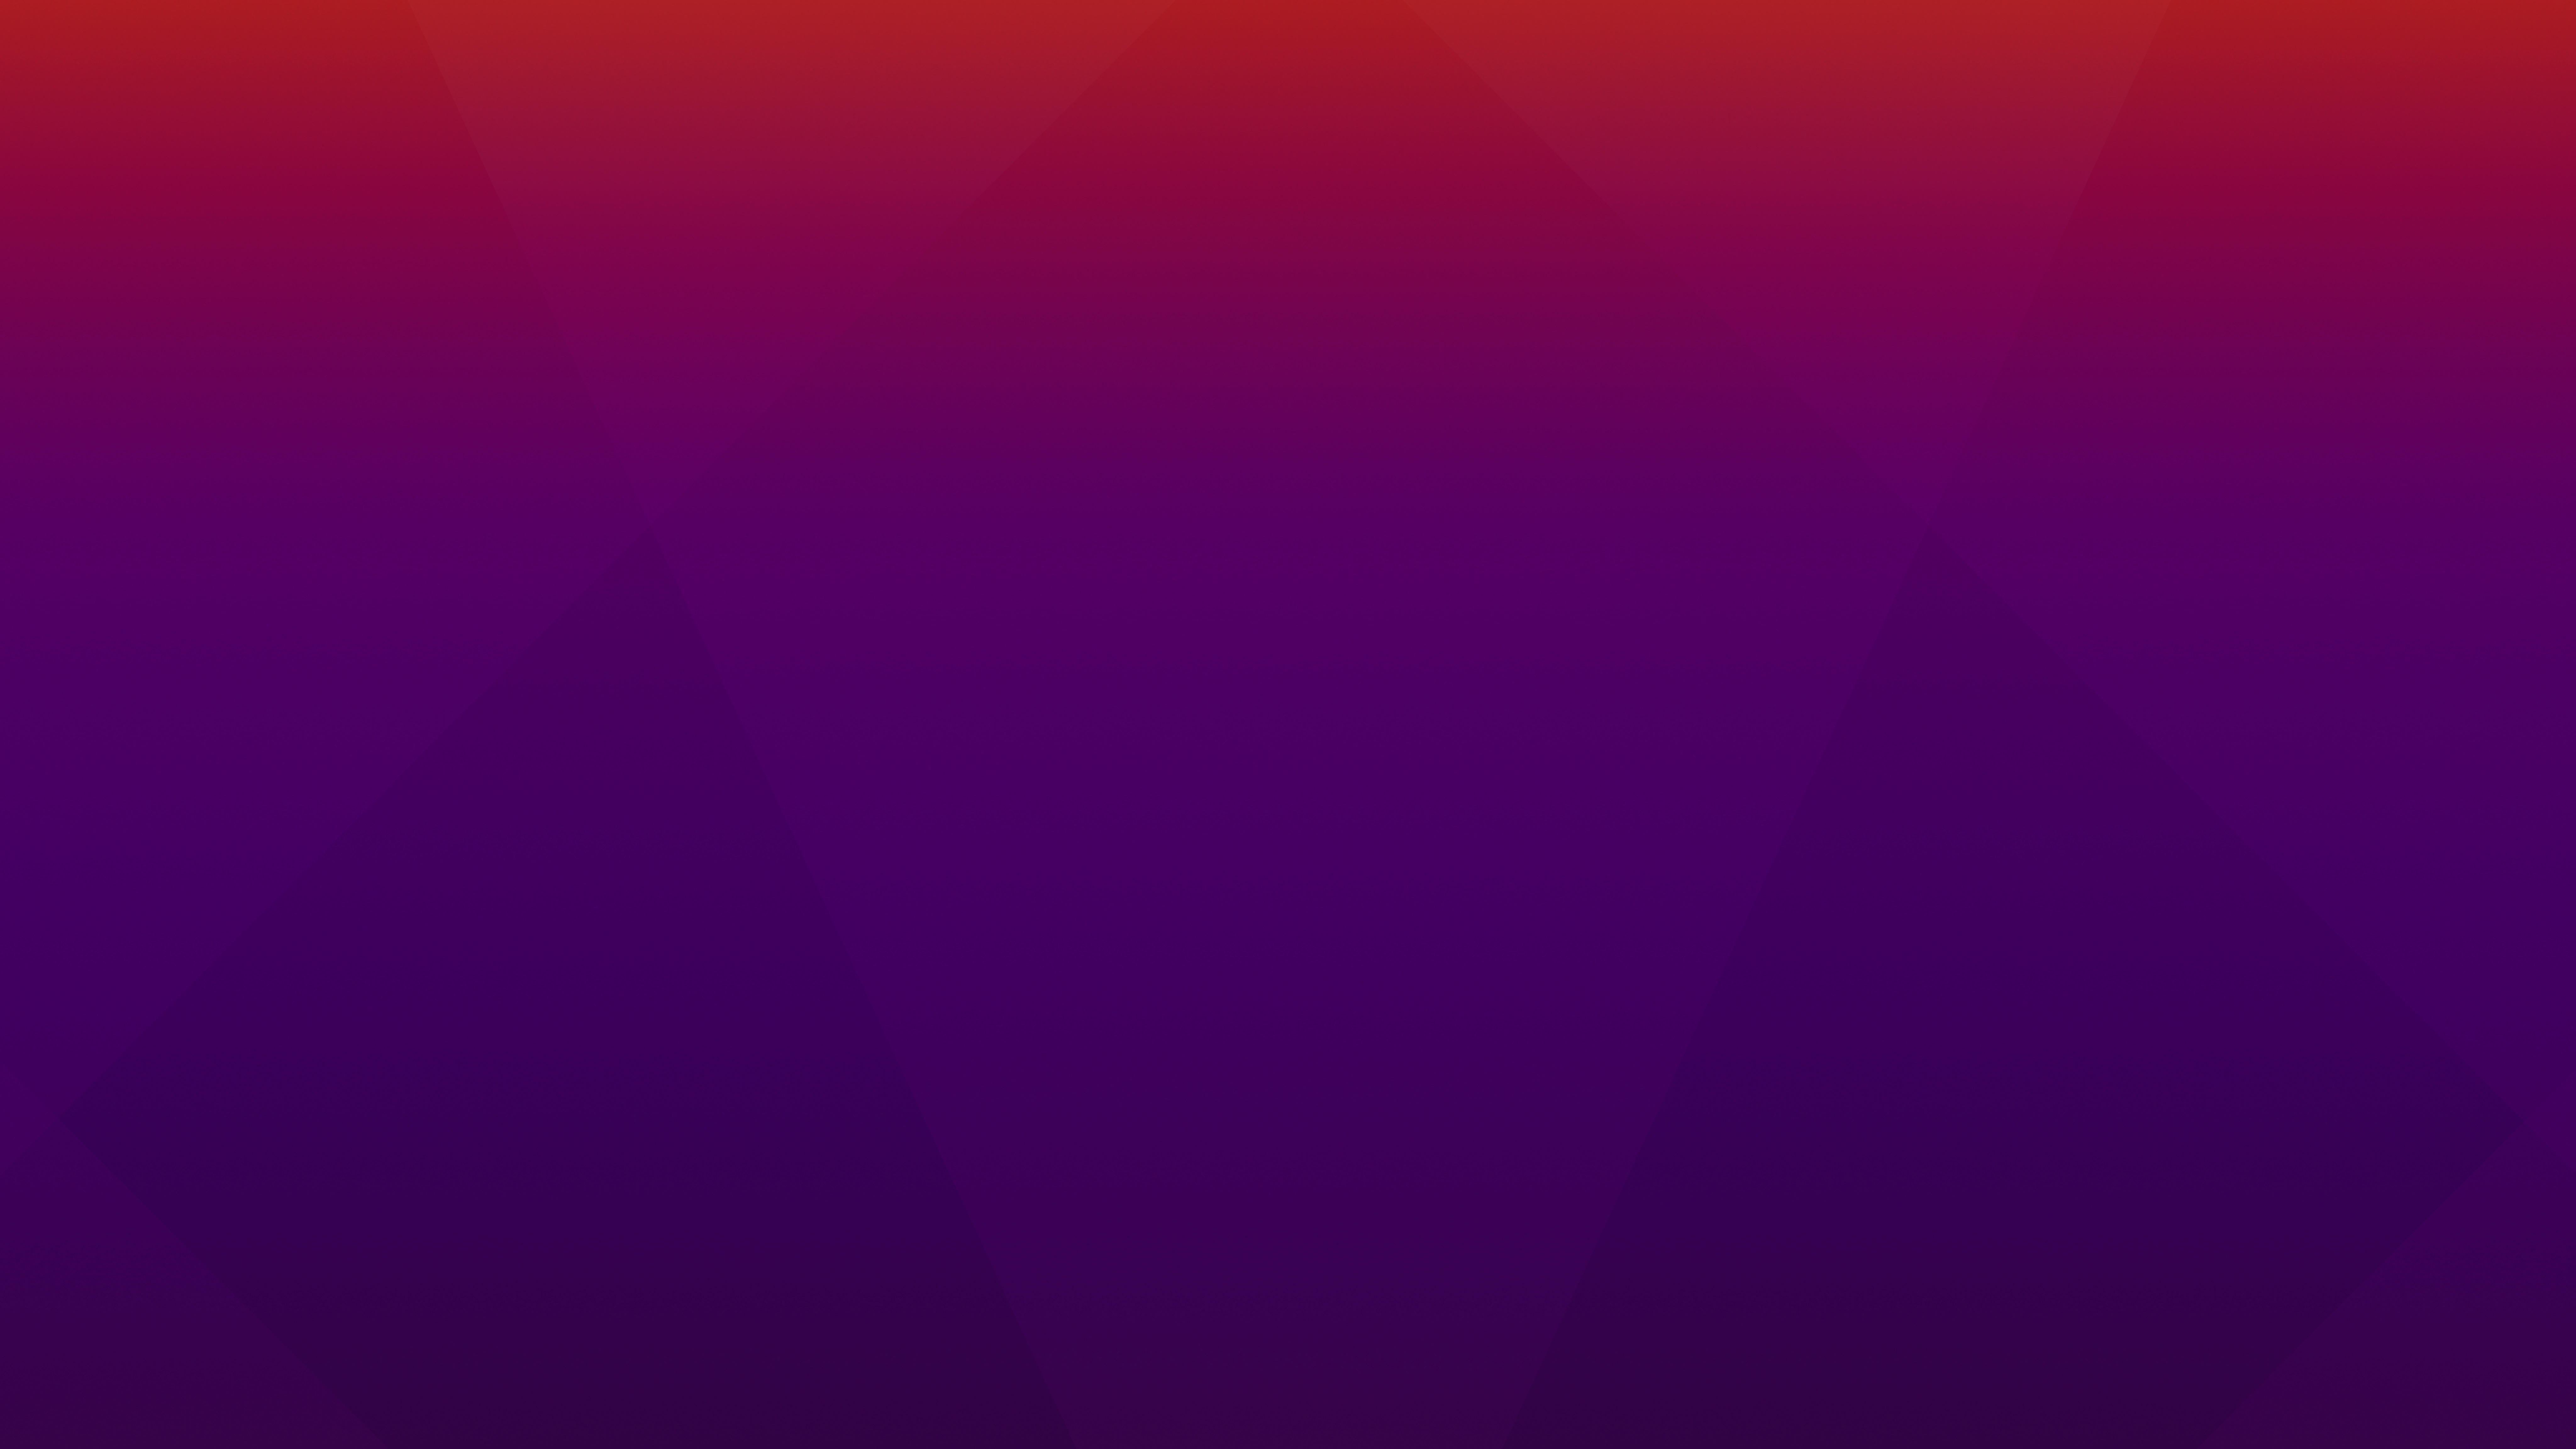 HD wallpaper, 8K, Violet Background, 5K, Stock, Ubuntu Mascot